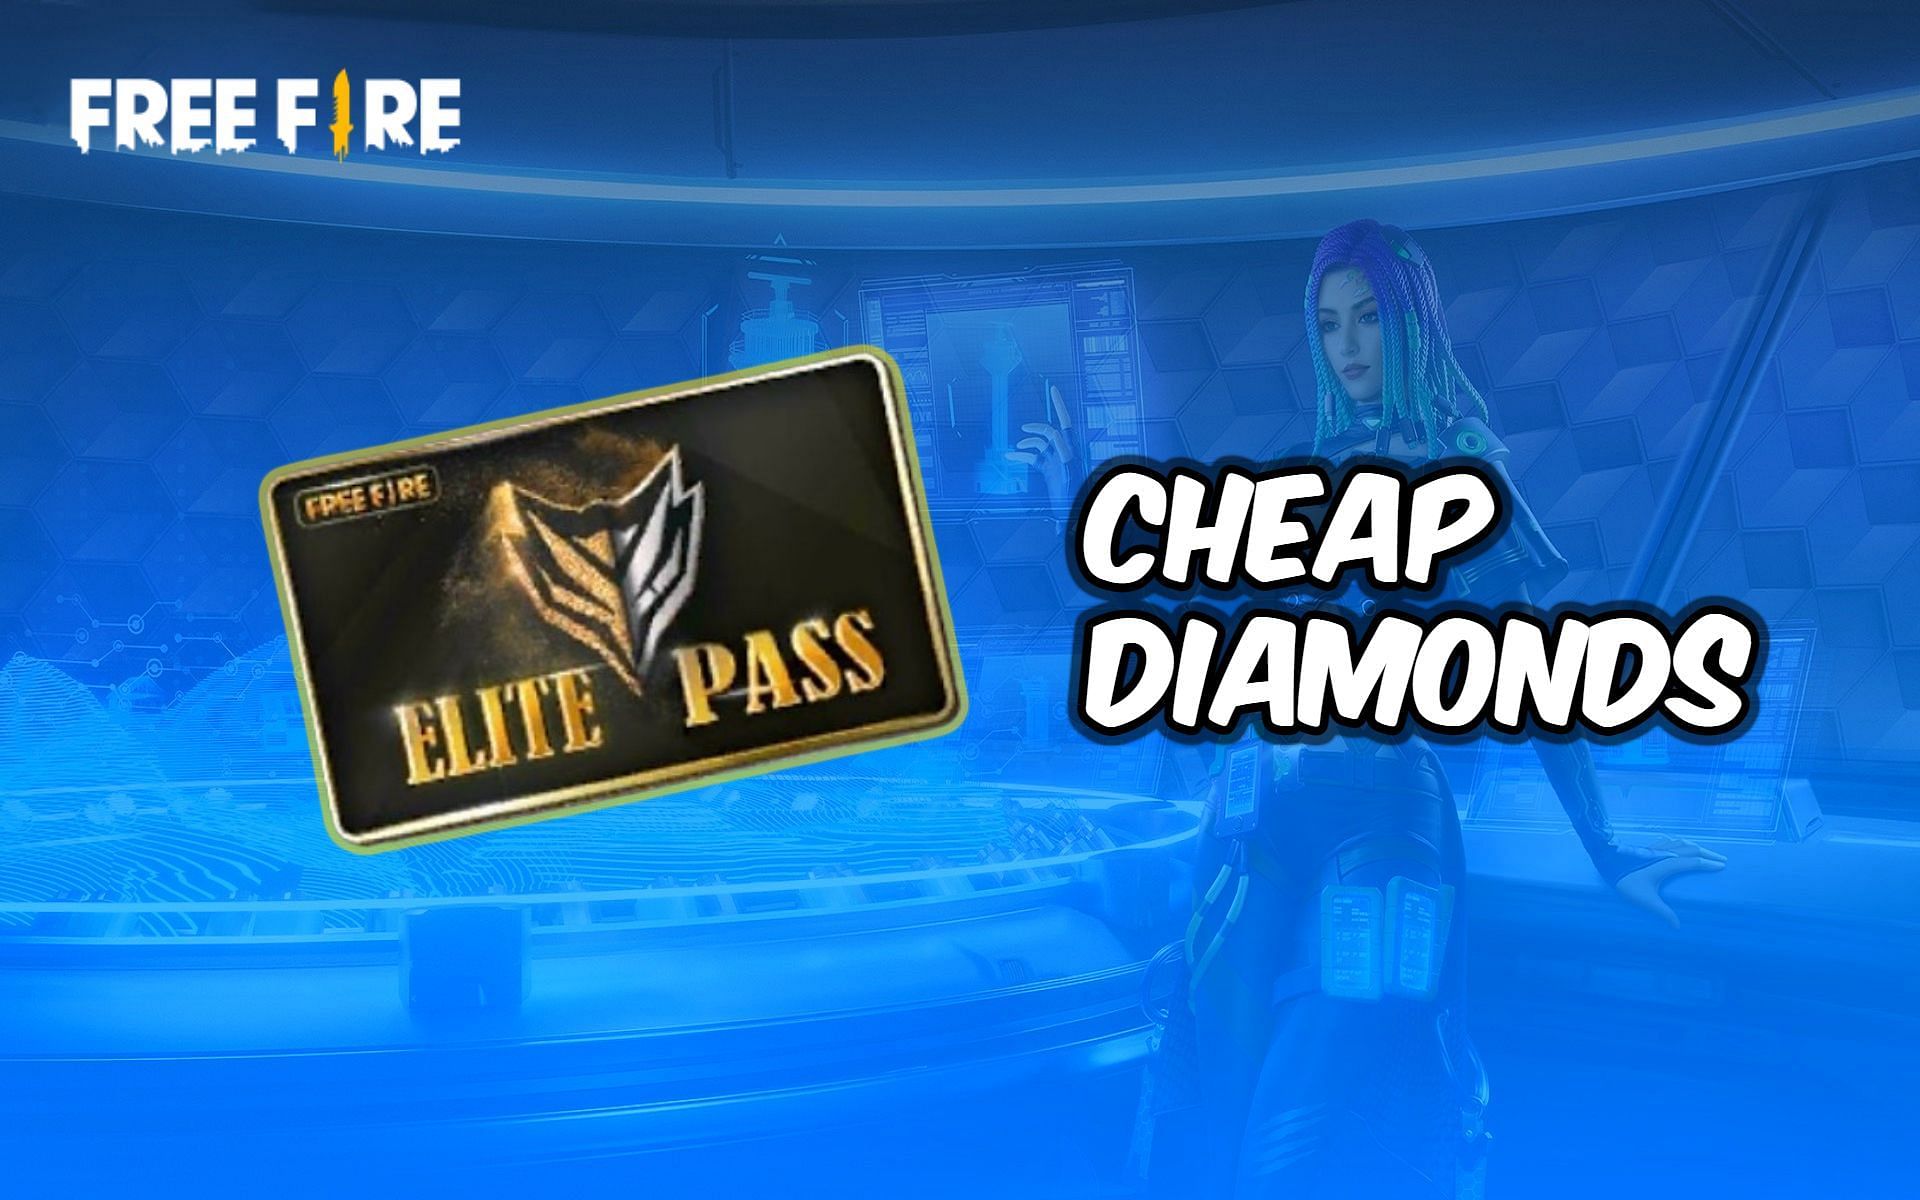 Cheap diamonds can be obtained through the Elite Pass (Image via Garena)